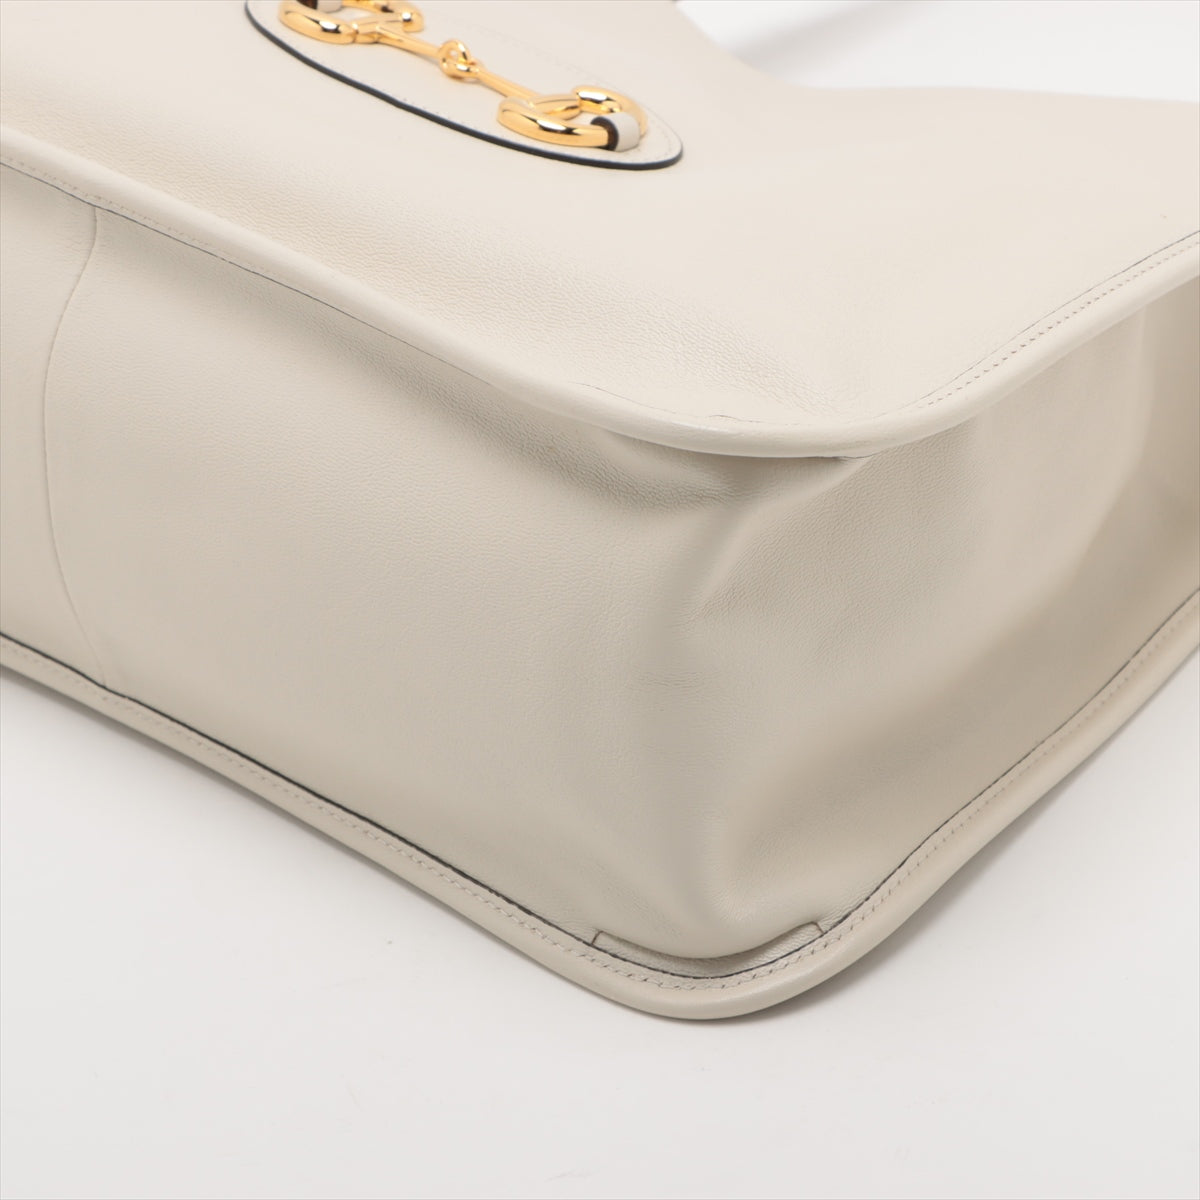 Gucci Horsebit 1955 Leather Tote bag White 623694